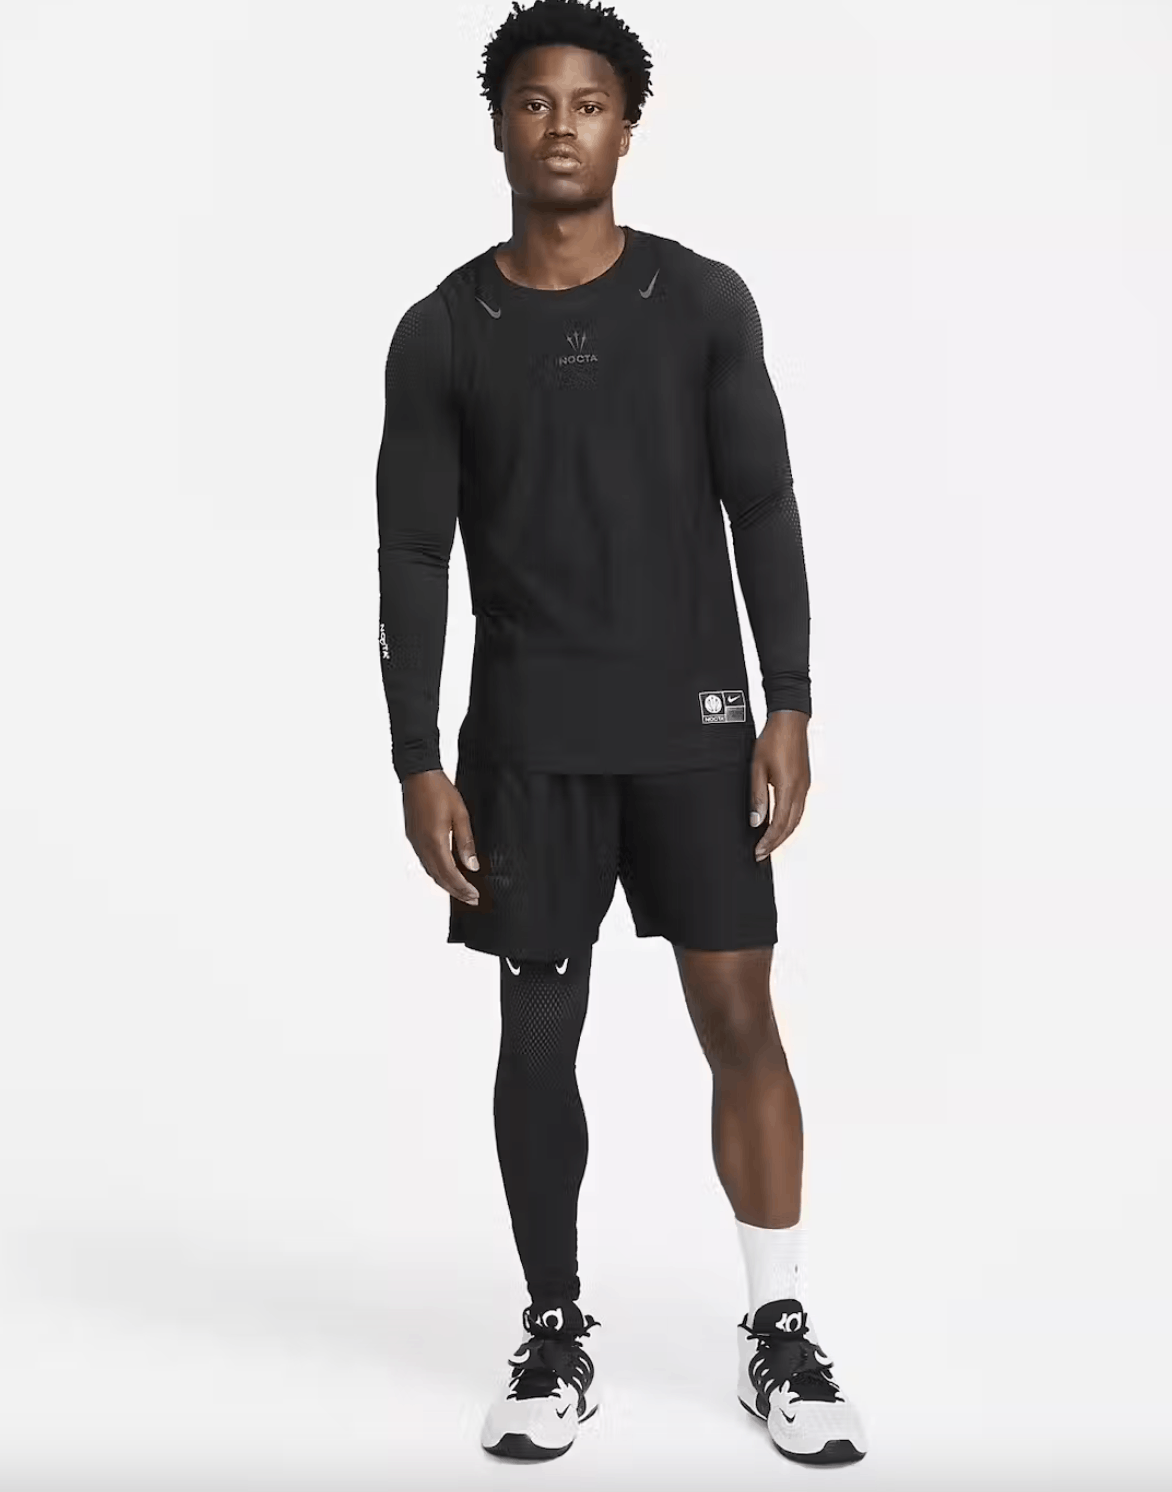 Nike x Drake NOCTA Compression Tight Basketball Left Single Leg Sleeve  Small NEW